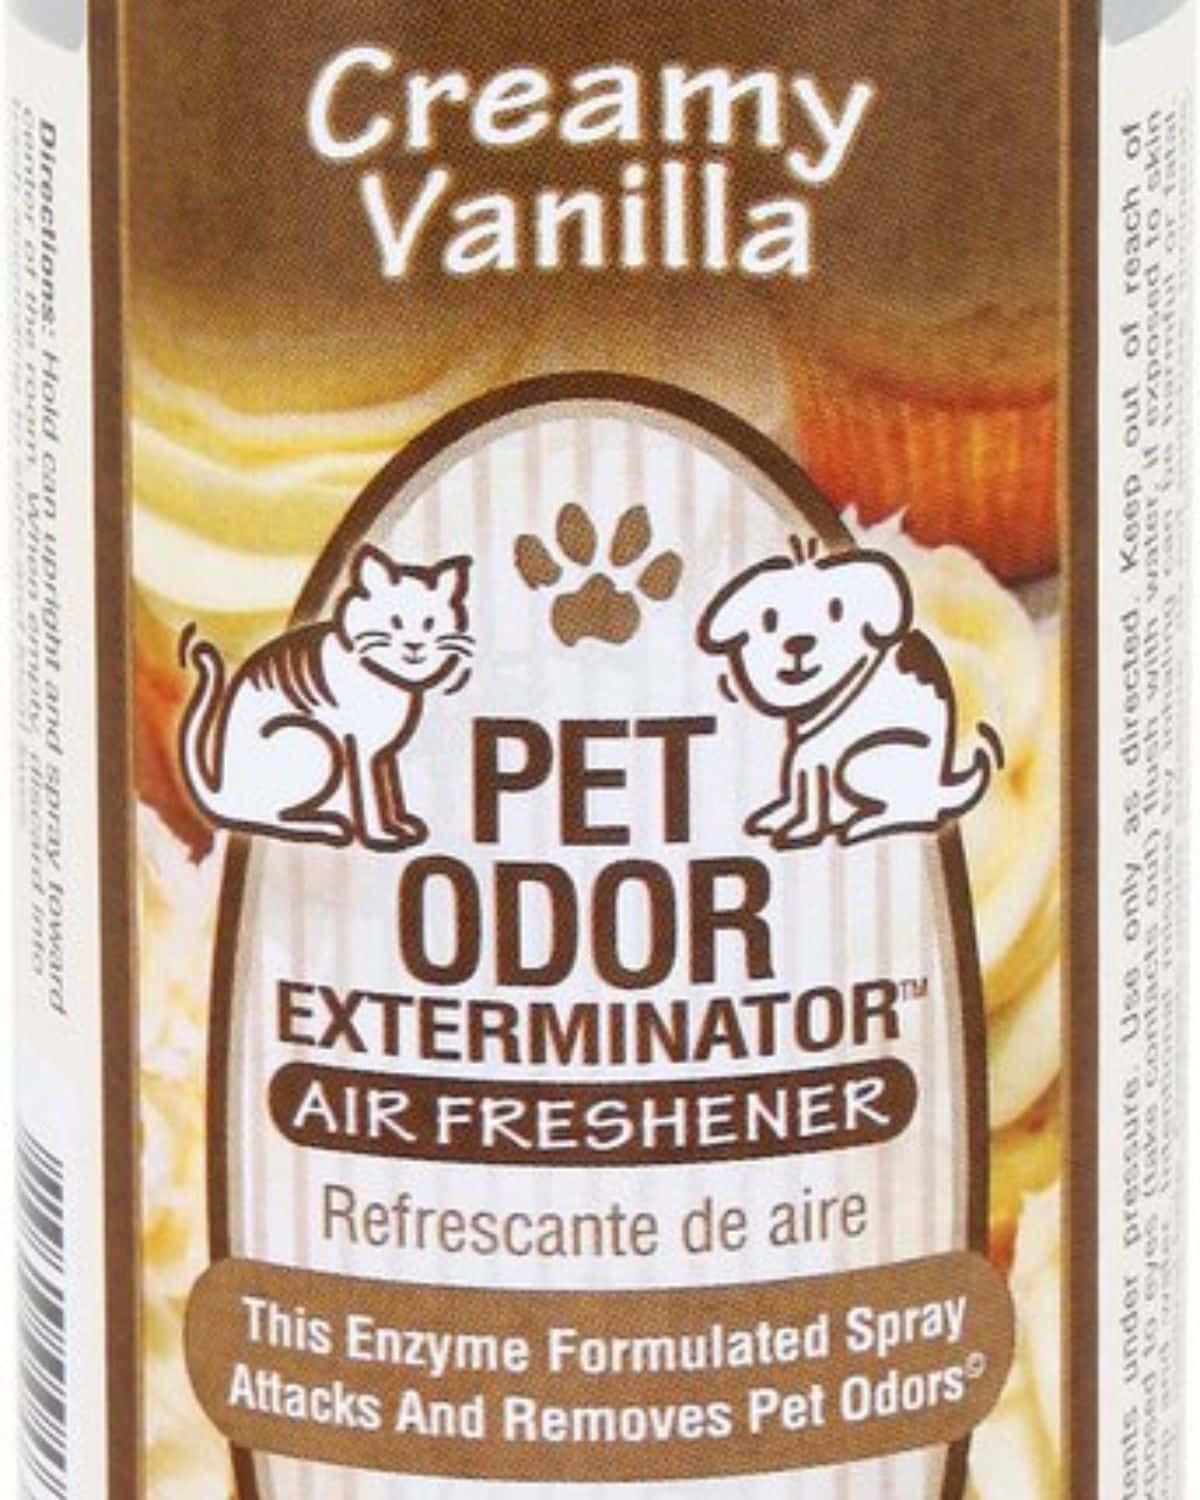 Pet Odor Exterminator: Creamy Vanilla Air Freshener